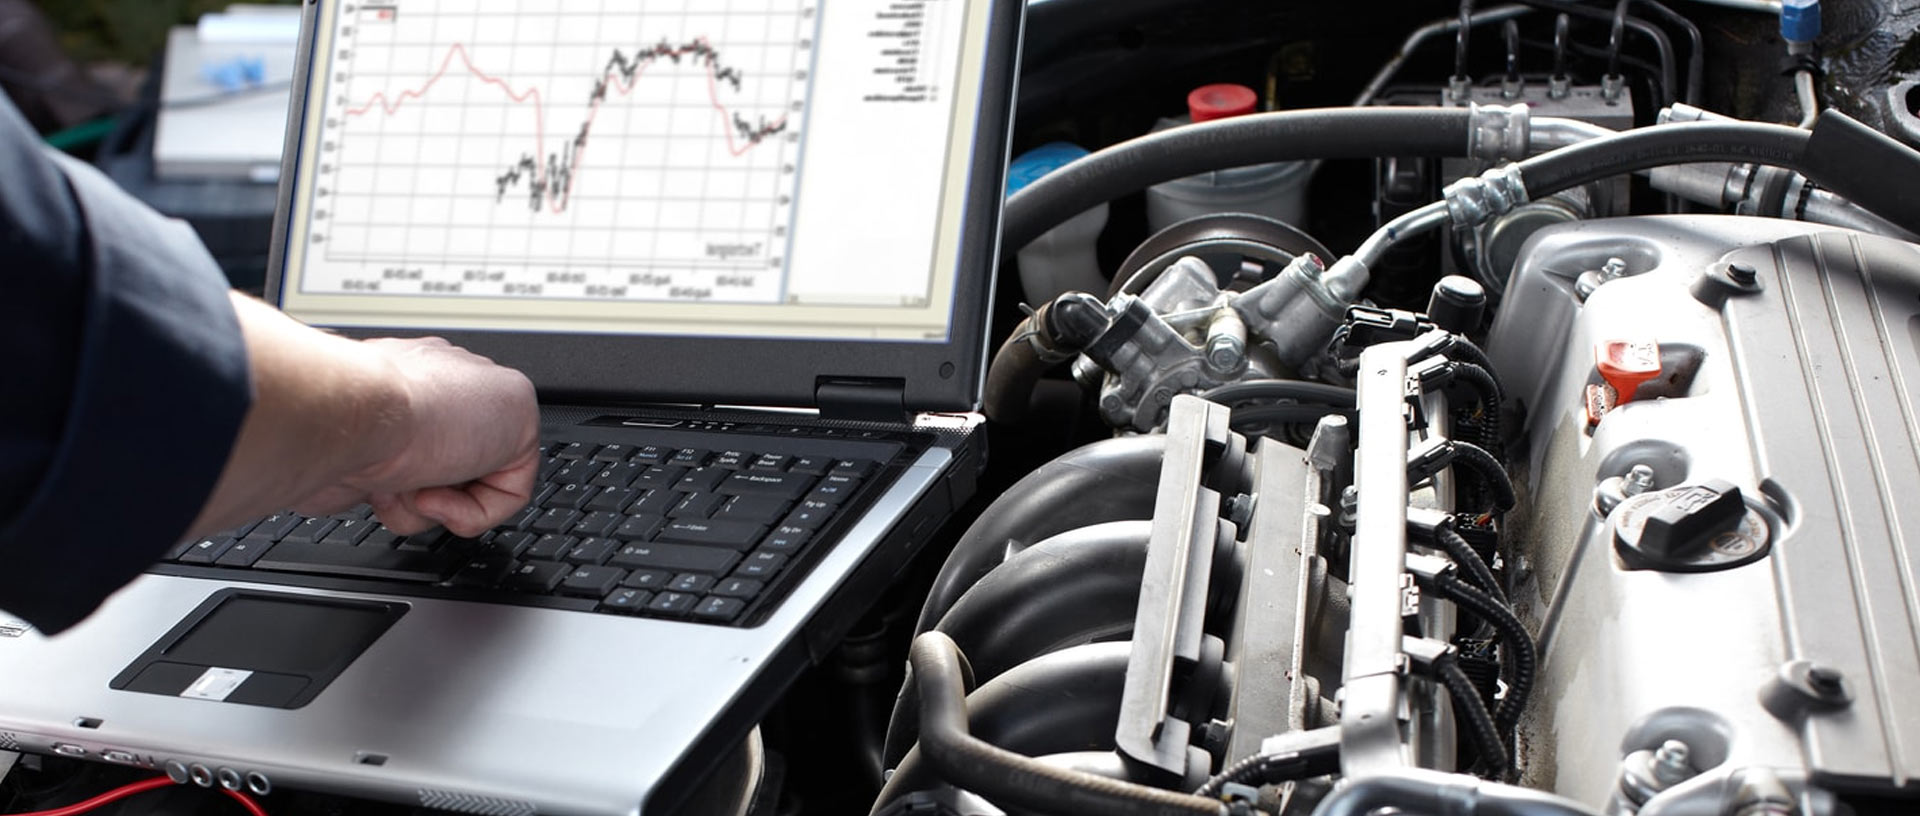 Auto Electronic Engine Diagnosis in Mascoutah, IL